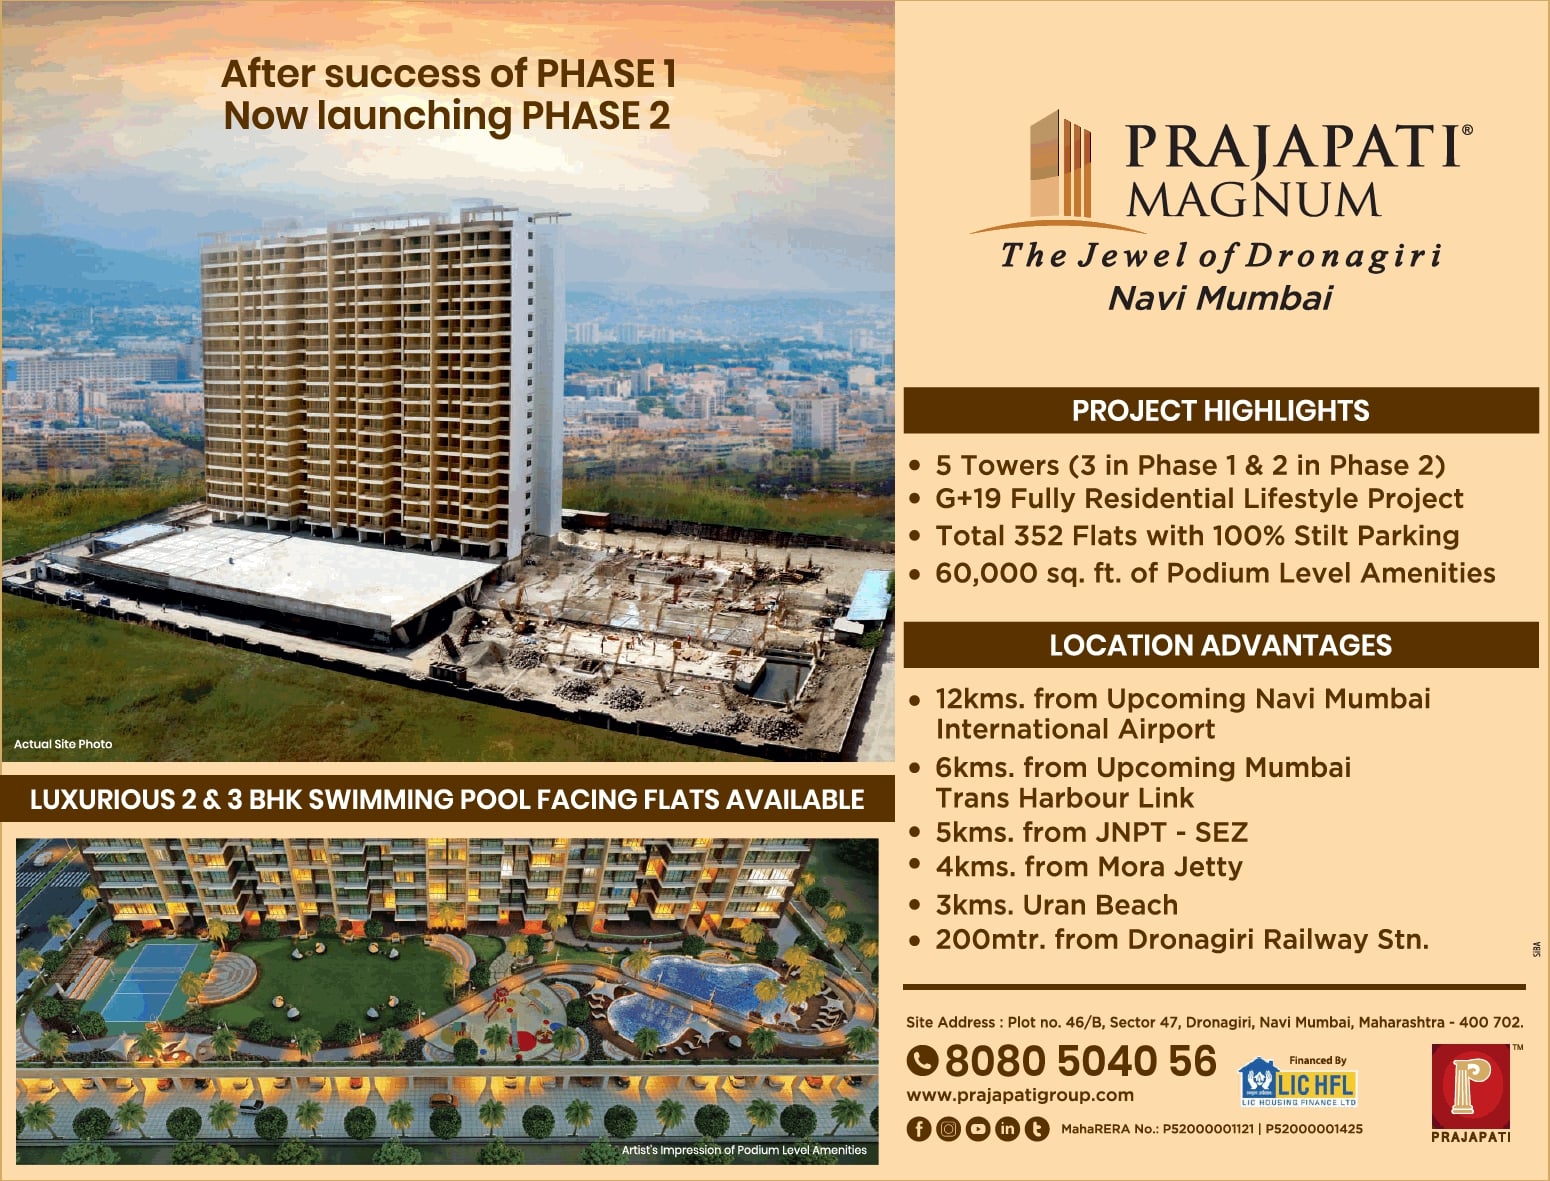 parjapati-magnum-the-jewel-of-dronagiri-navi-mumbai-ad-times-of-india-mumbai-13-02-2021